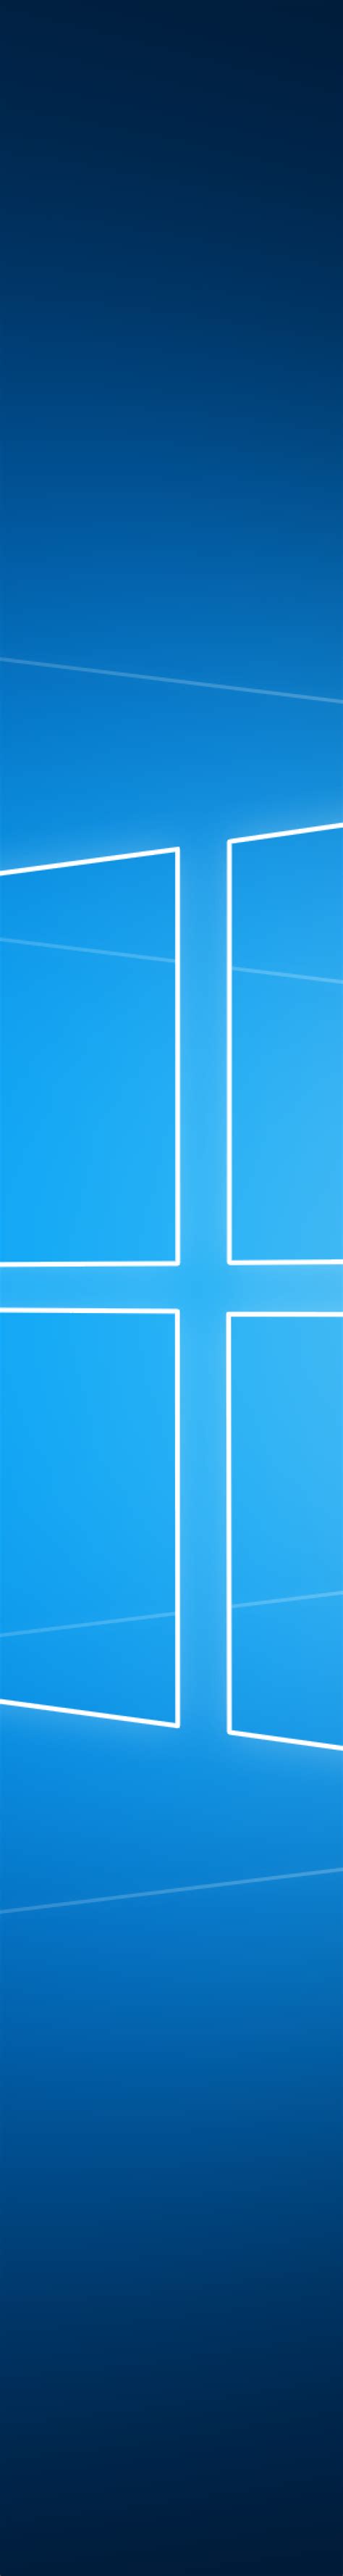 1152x8640 Windows 10 Hero Logo 1152x8640 Resolution Wallpaper Hd